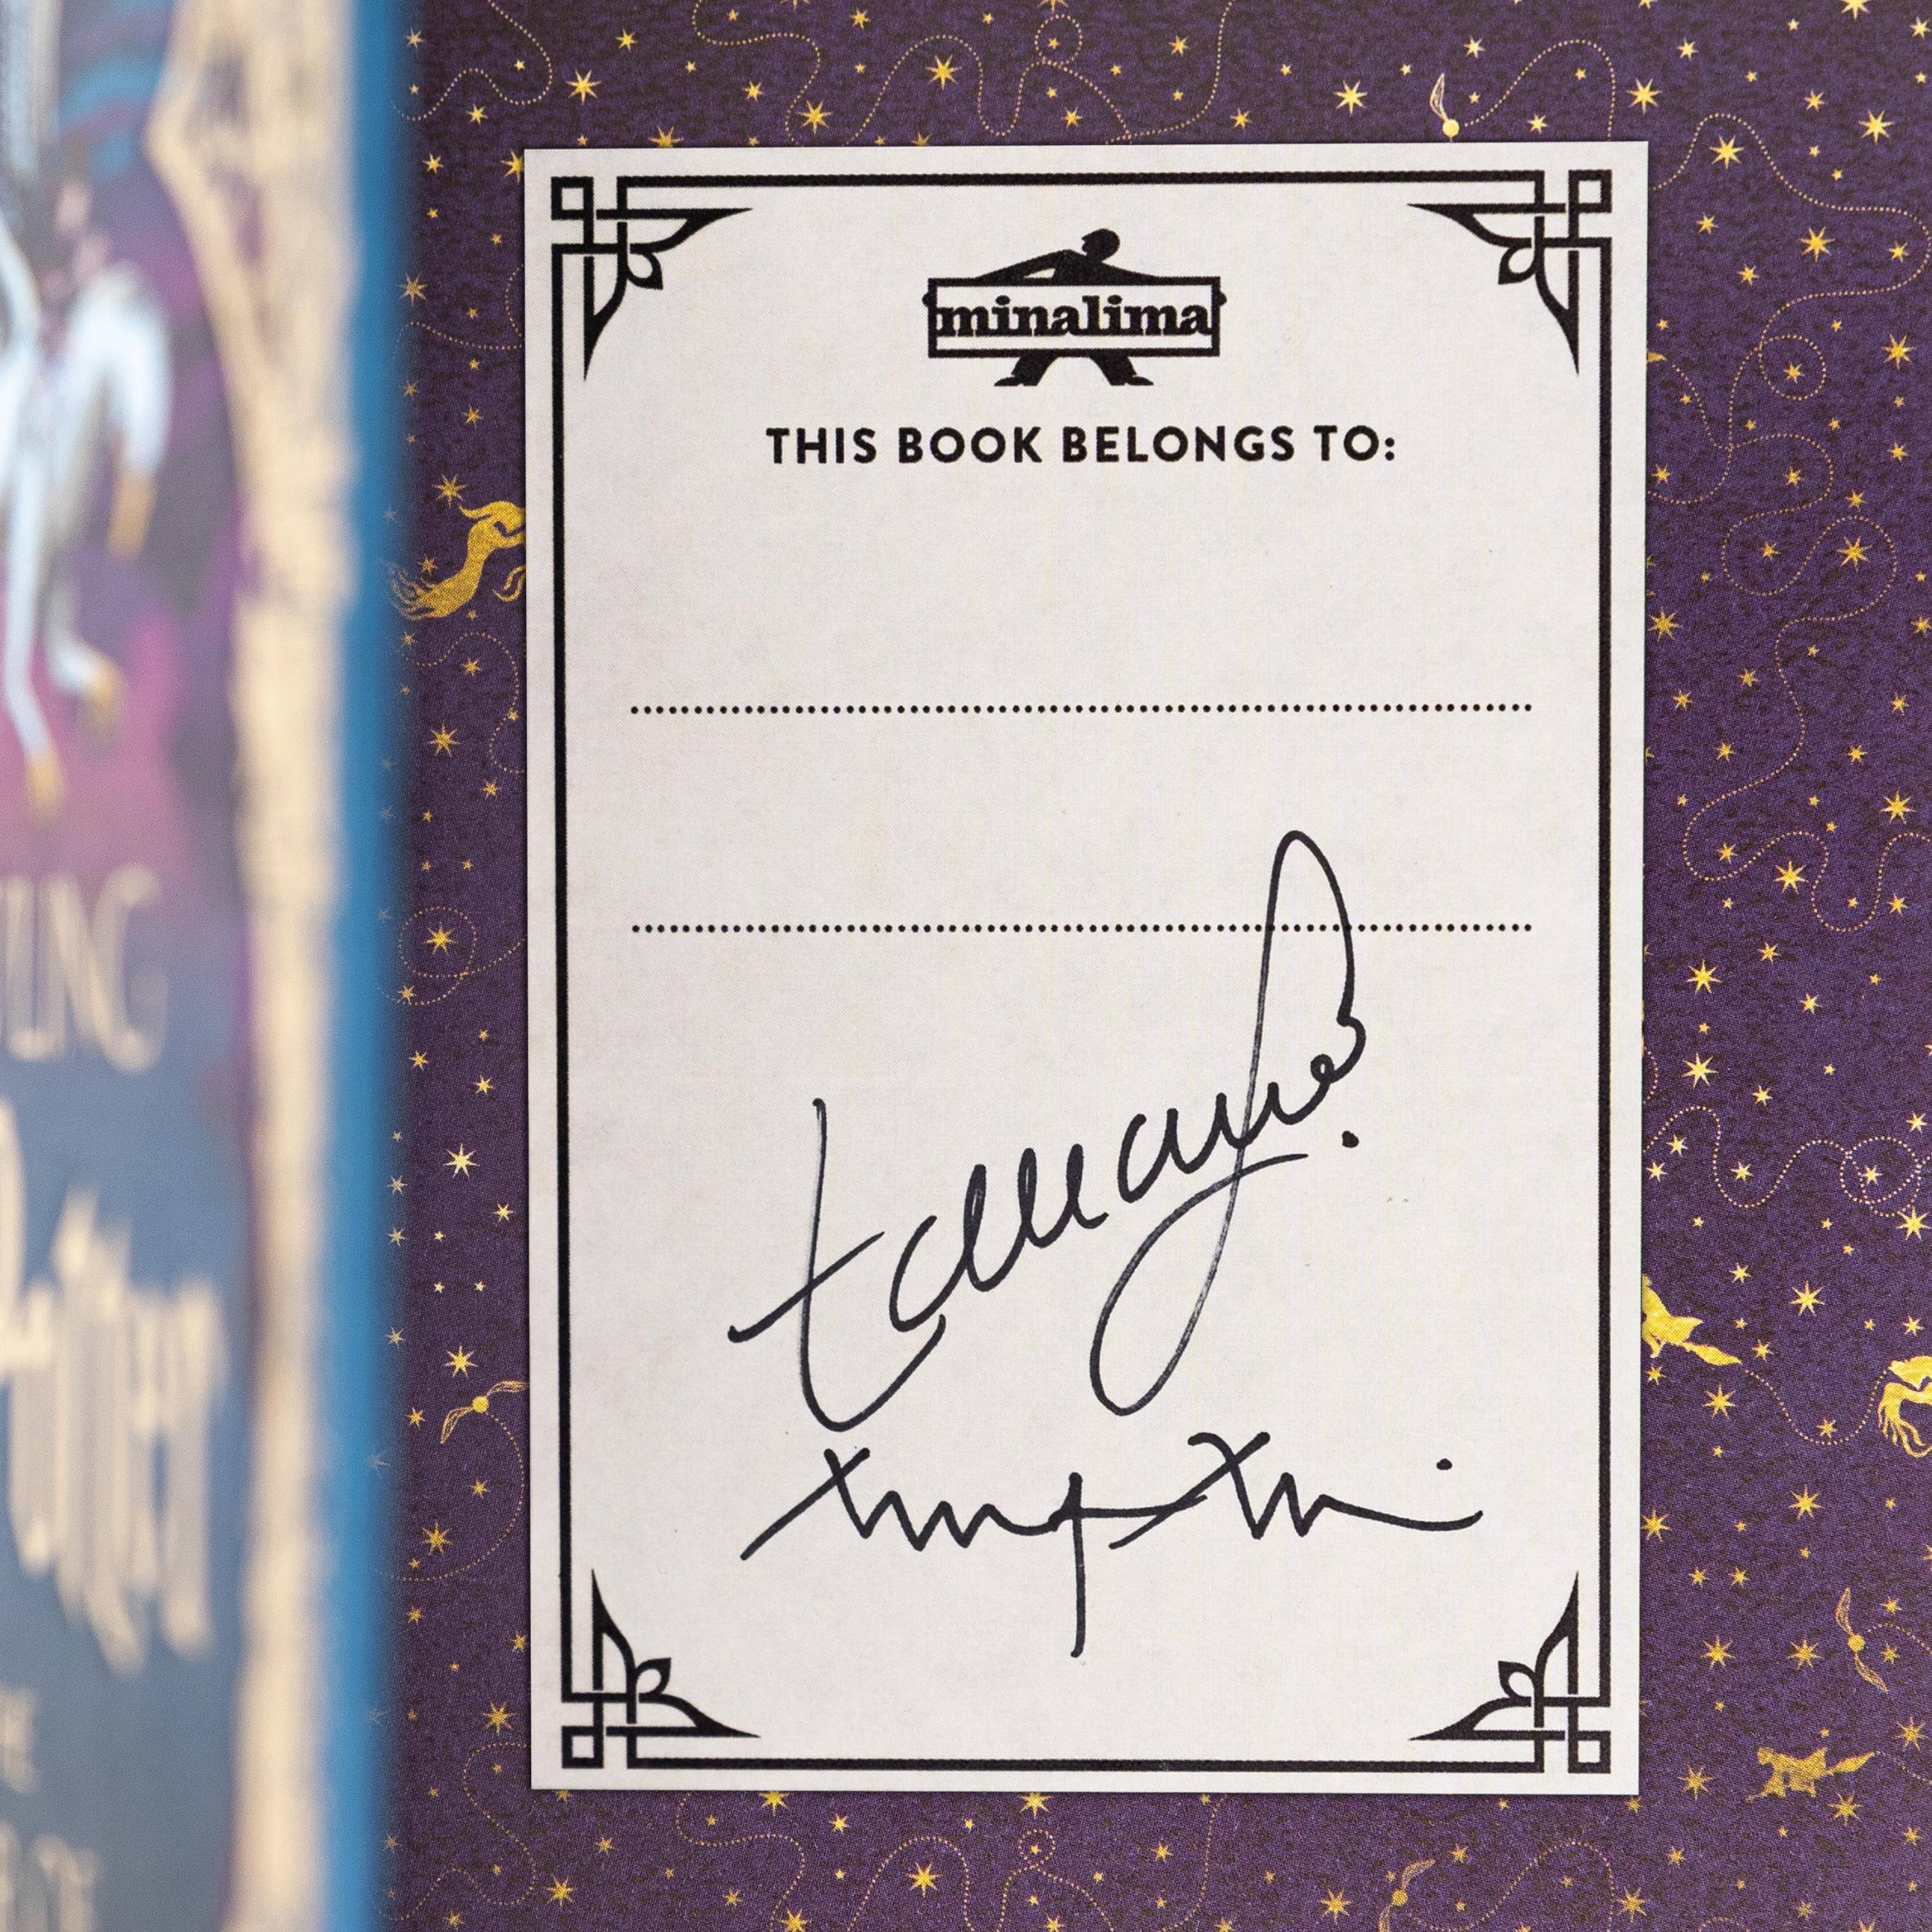 Minalima Signed Edition Harry Potter & the Chamber of Secrets 1st/1st